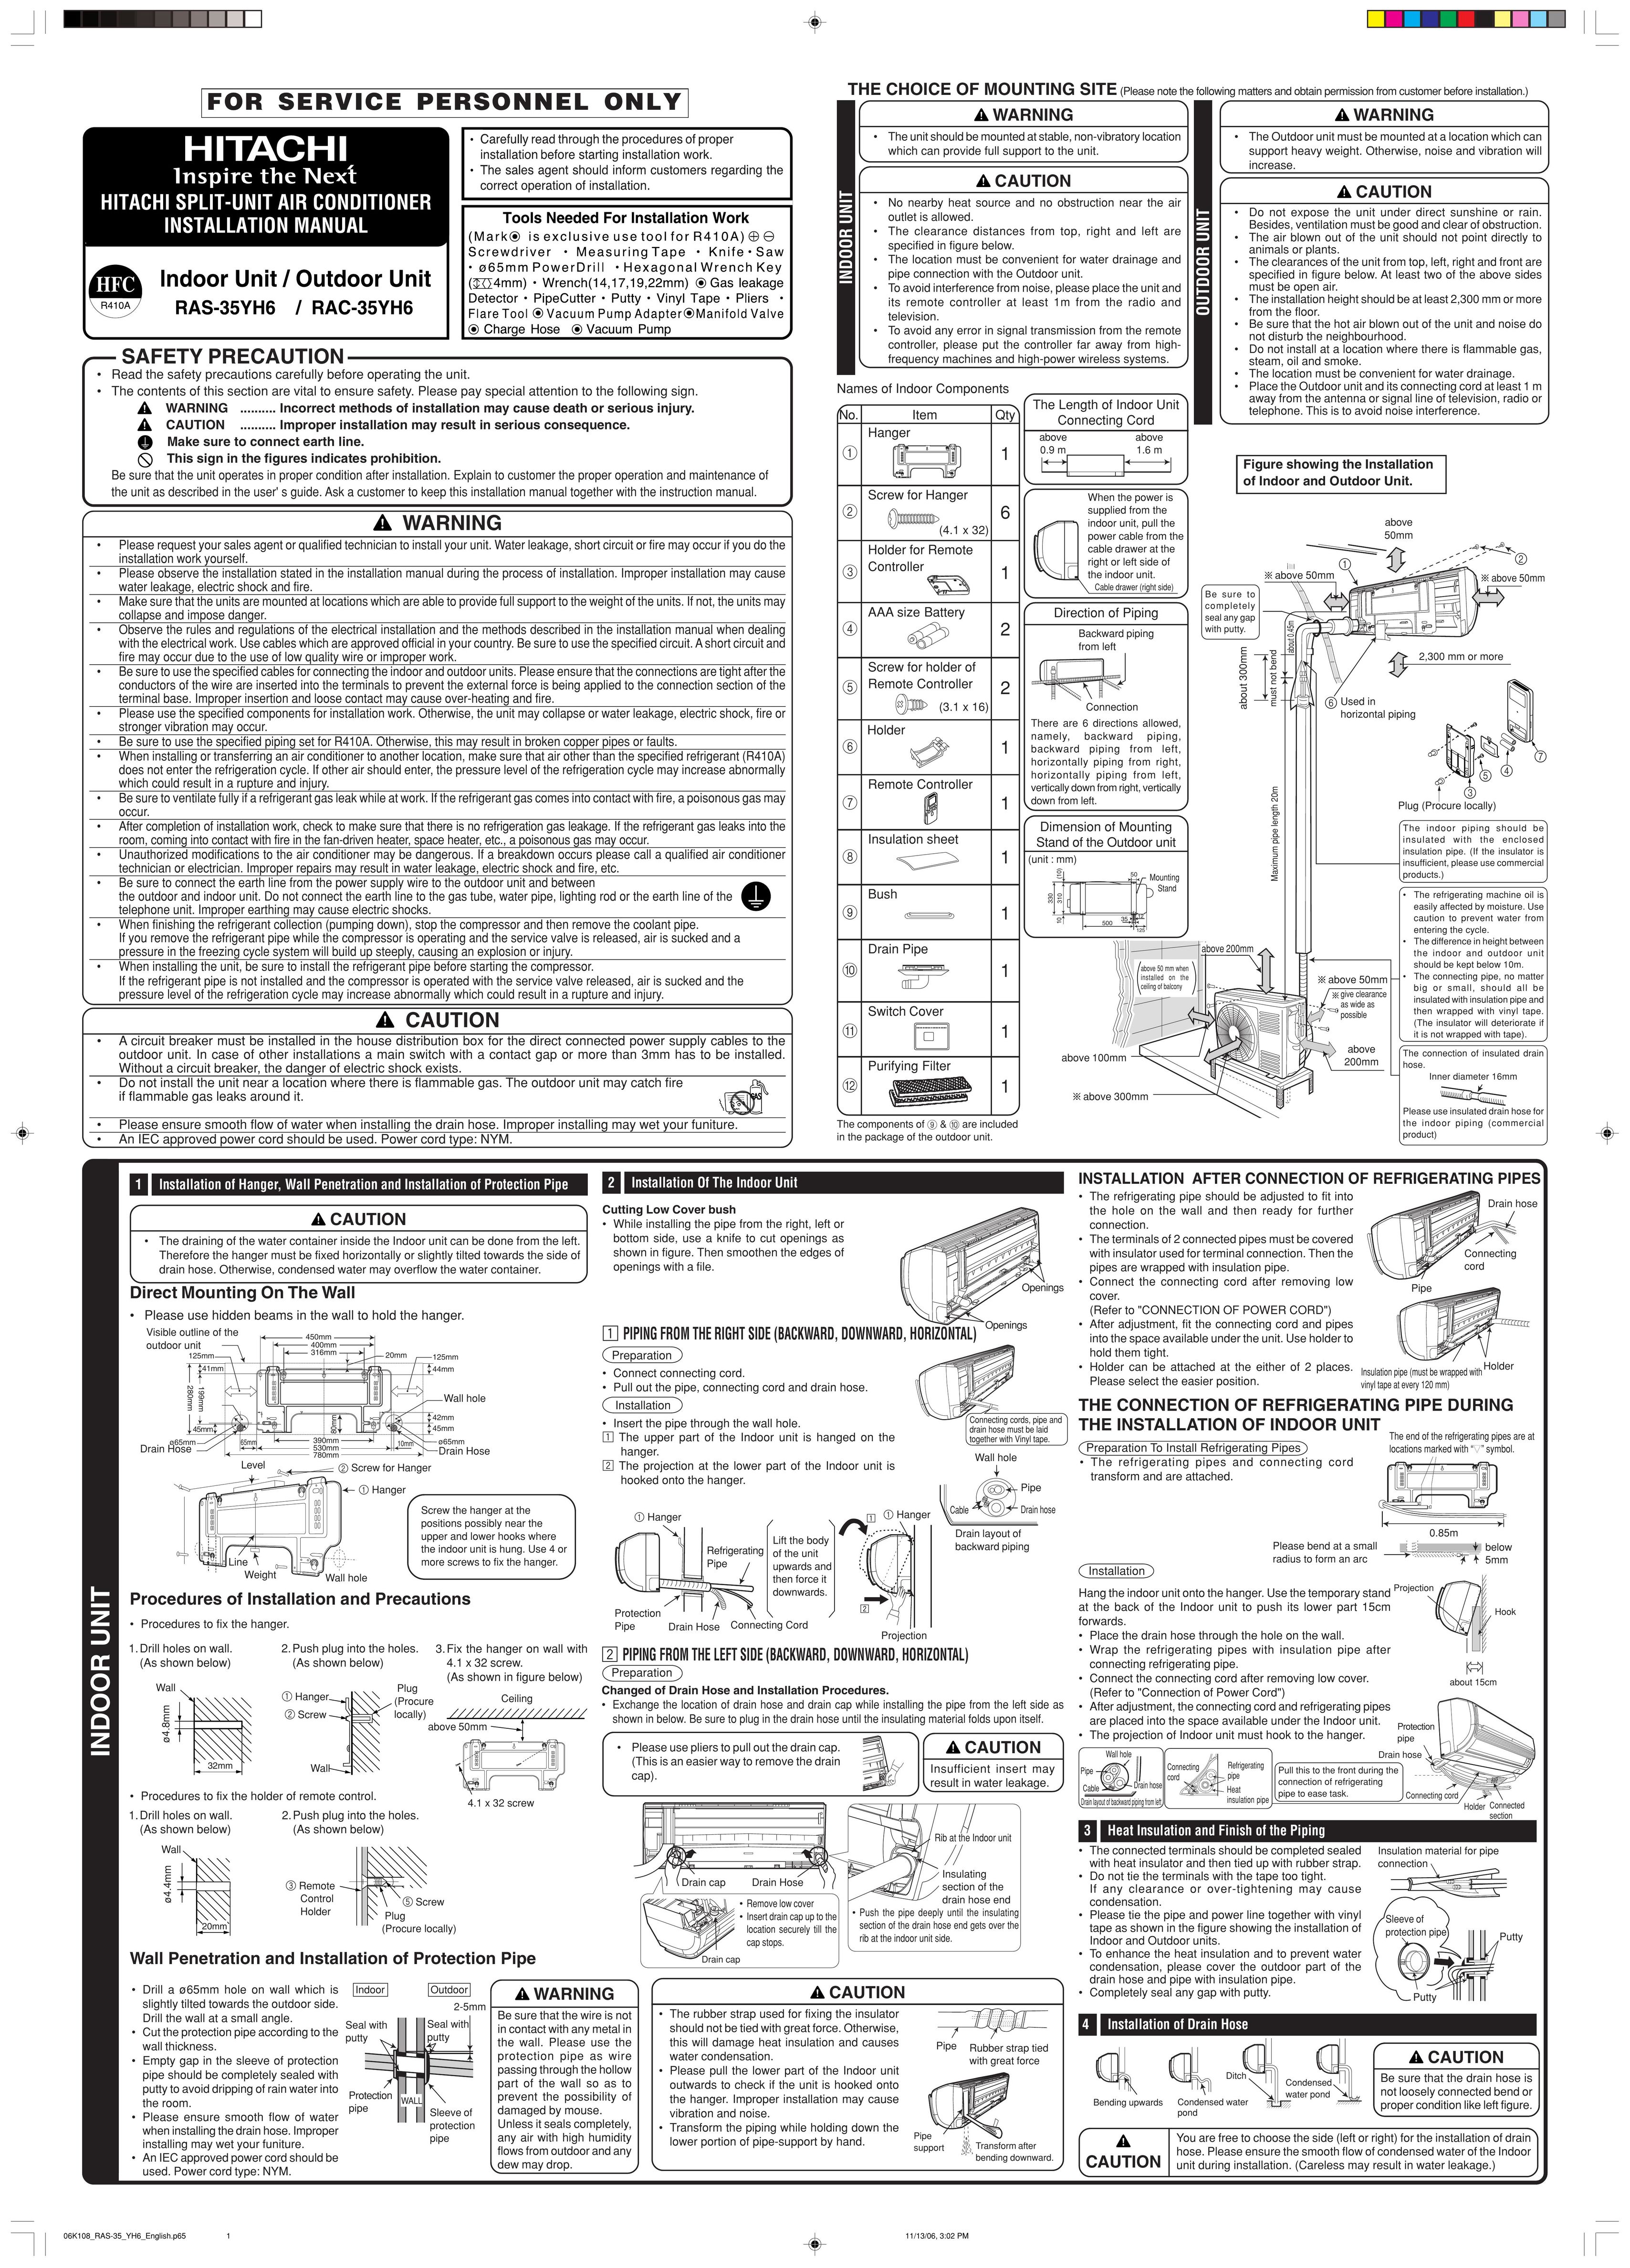 Hitachi RAS-35YH6 Air Conditioner User Manual